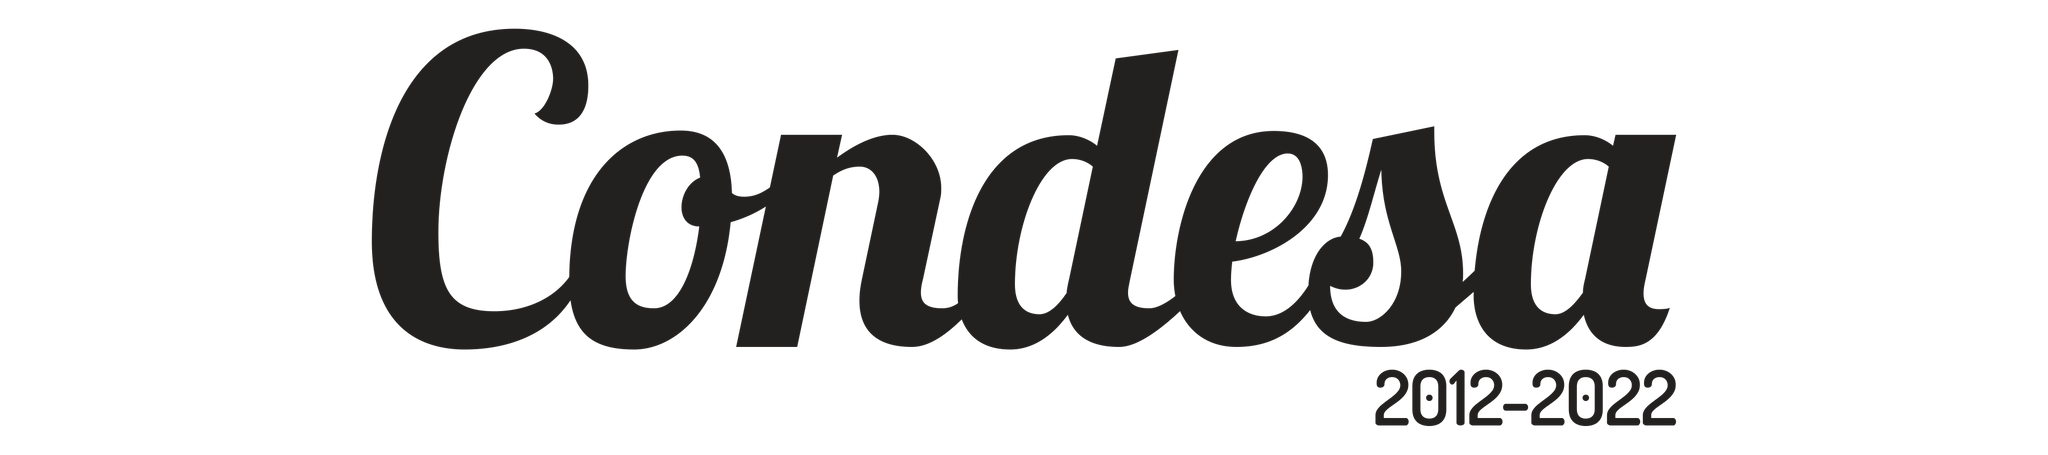 Condesa 10 Years Banner Logo